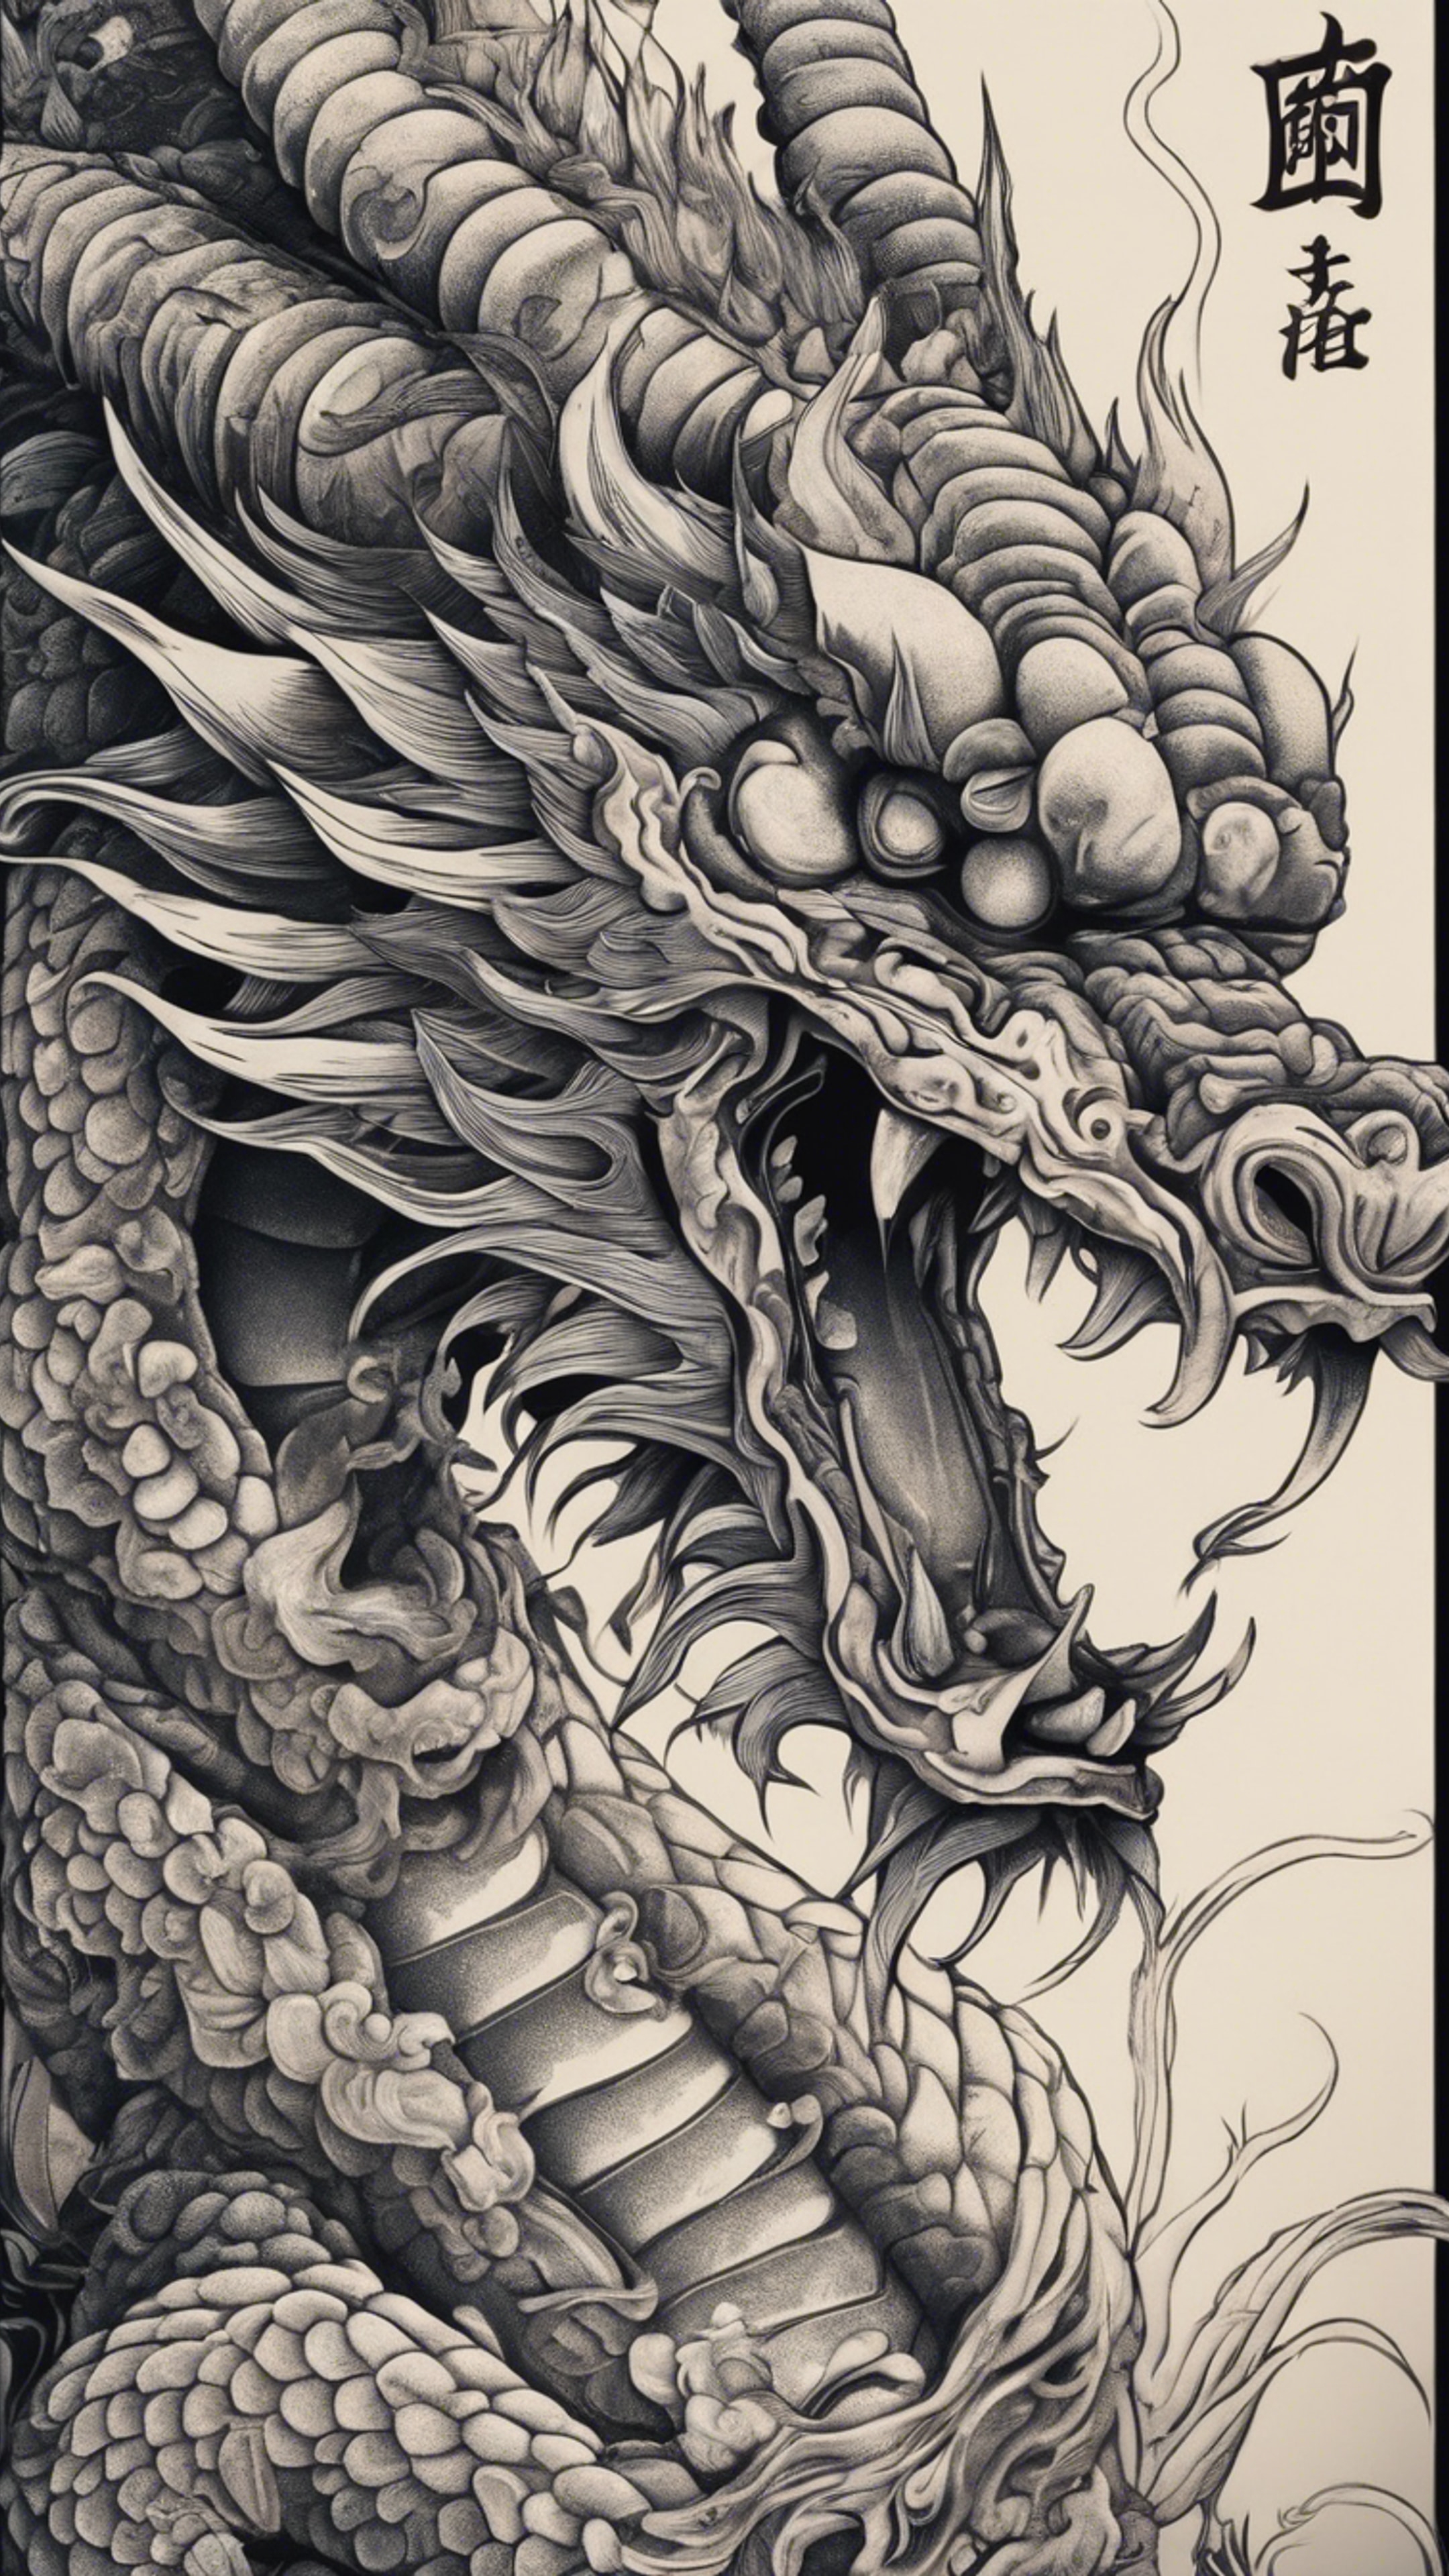 A Japanese dragon tattoo design with intricate details. Kertas dinding[fa4ff1f2e6c24a2f94e4]